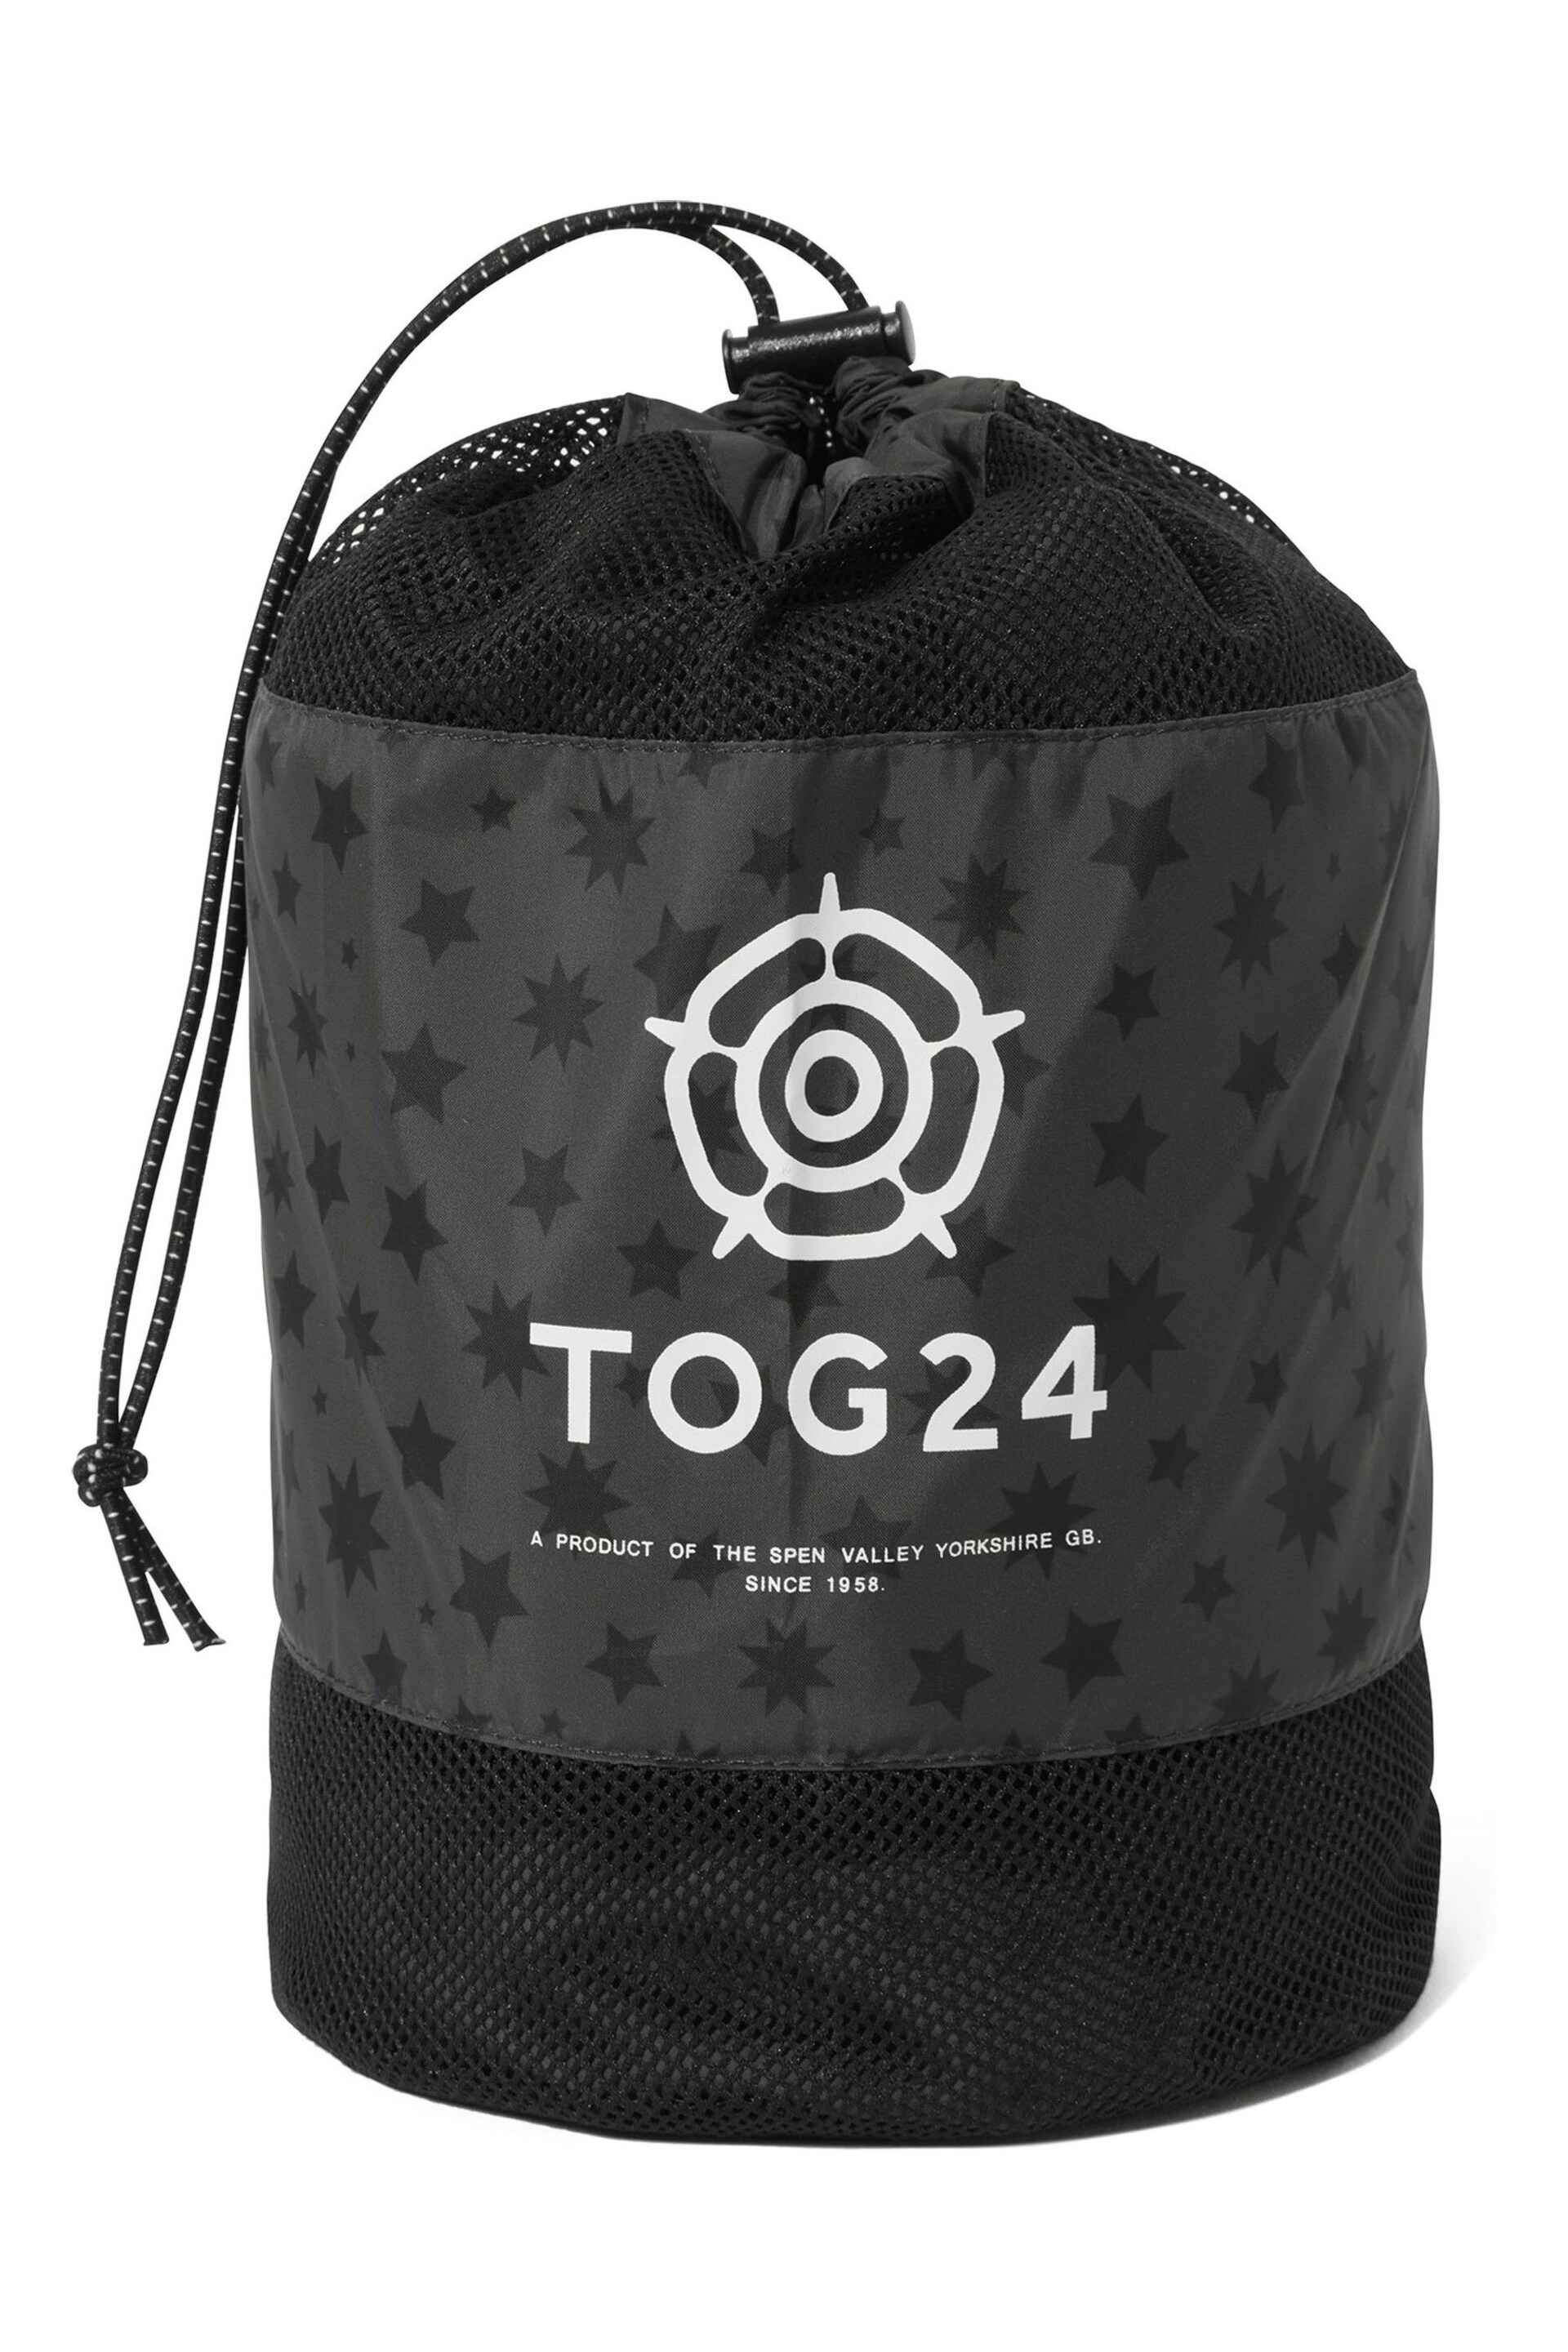 Tog 24 Black Craven Waterproof Packaway Jacket - Image 7 of 7